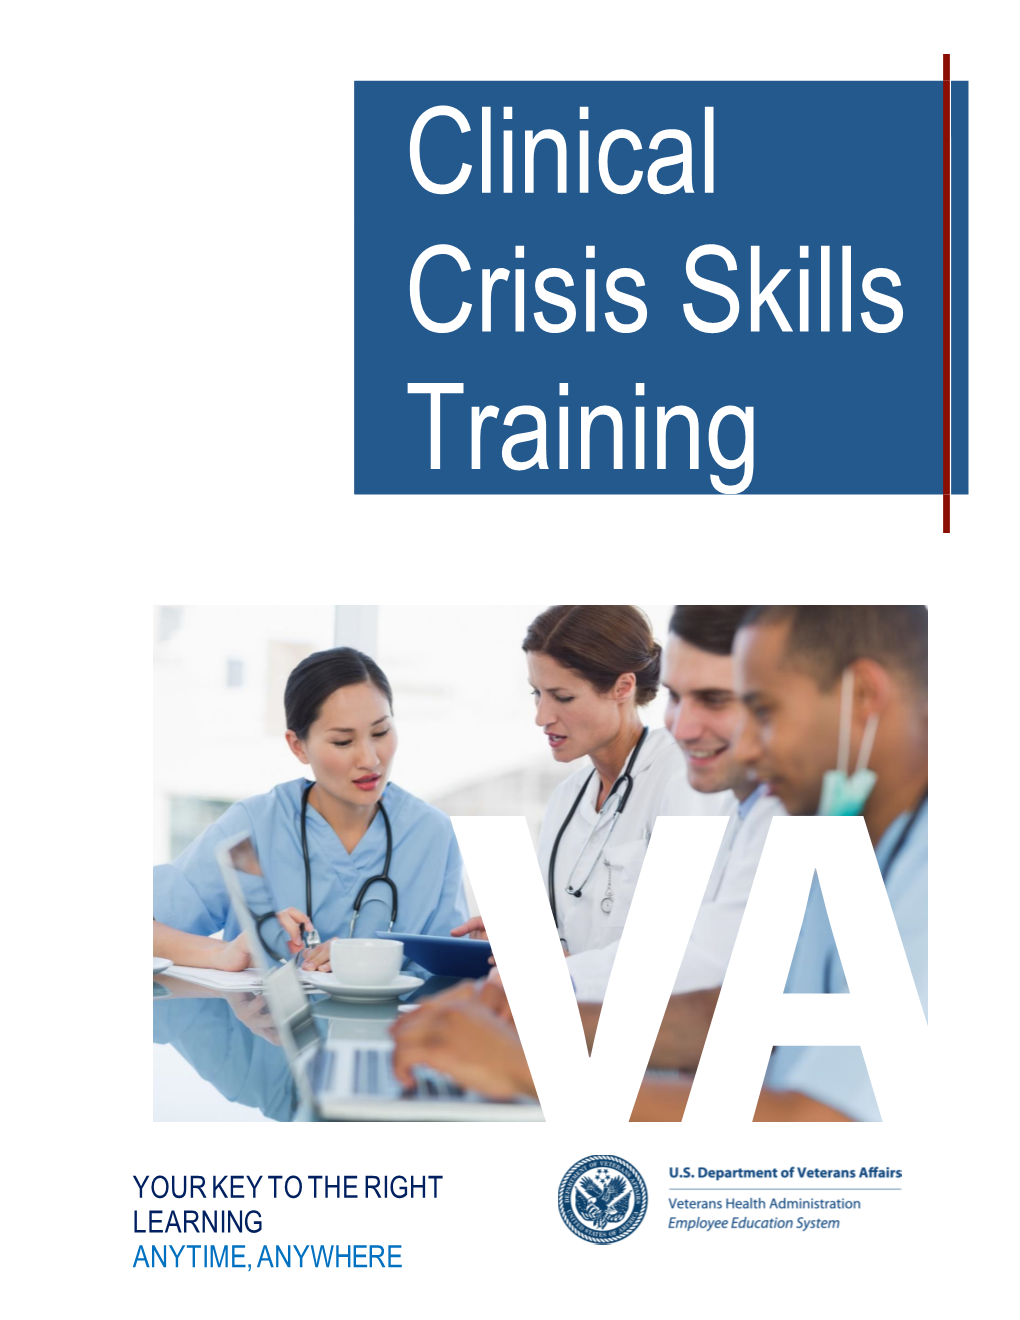 Clinical Crisis Skills Training